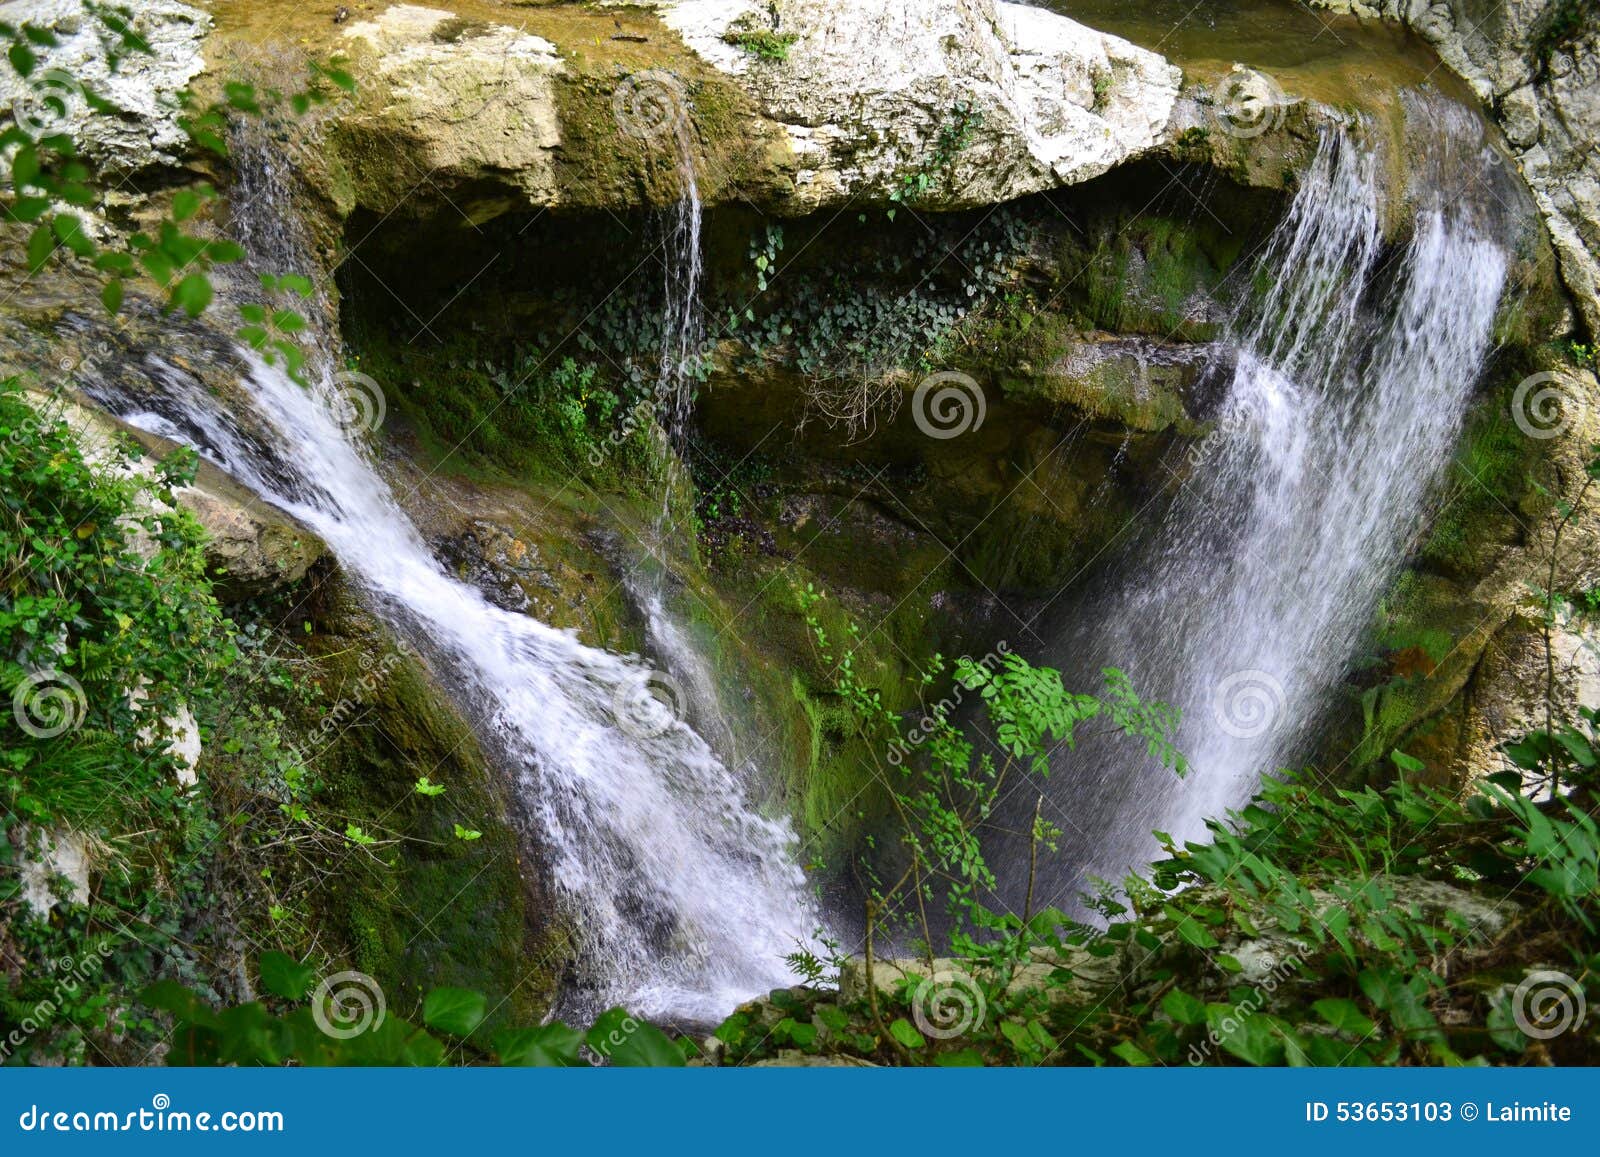 agura waterfalls in sochi